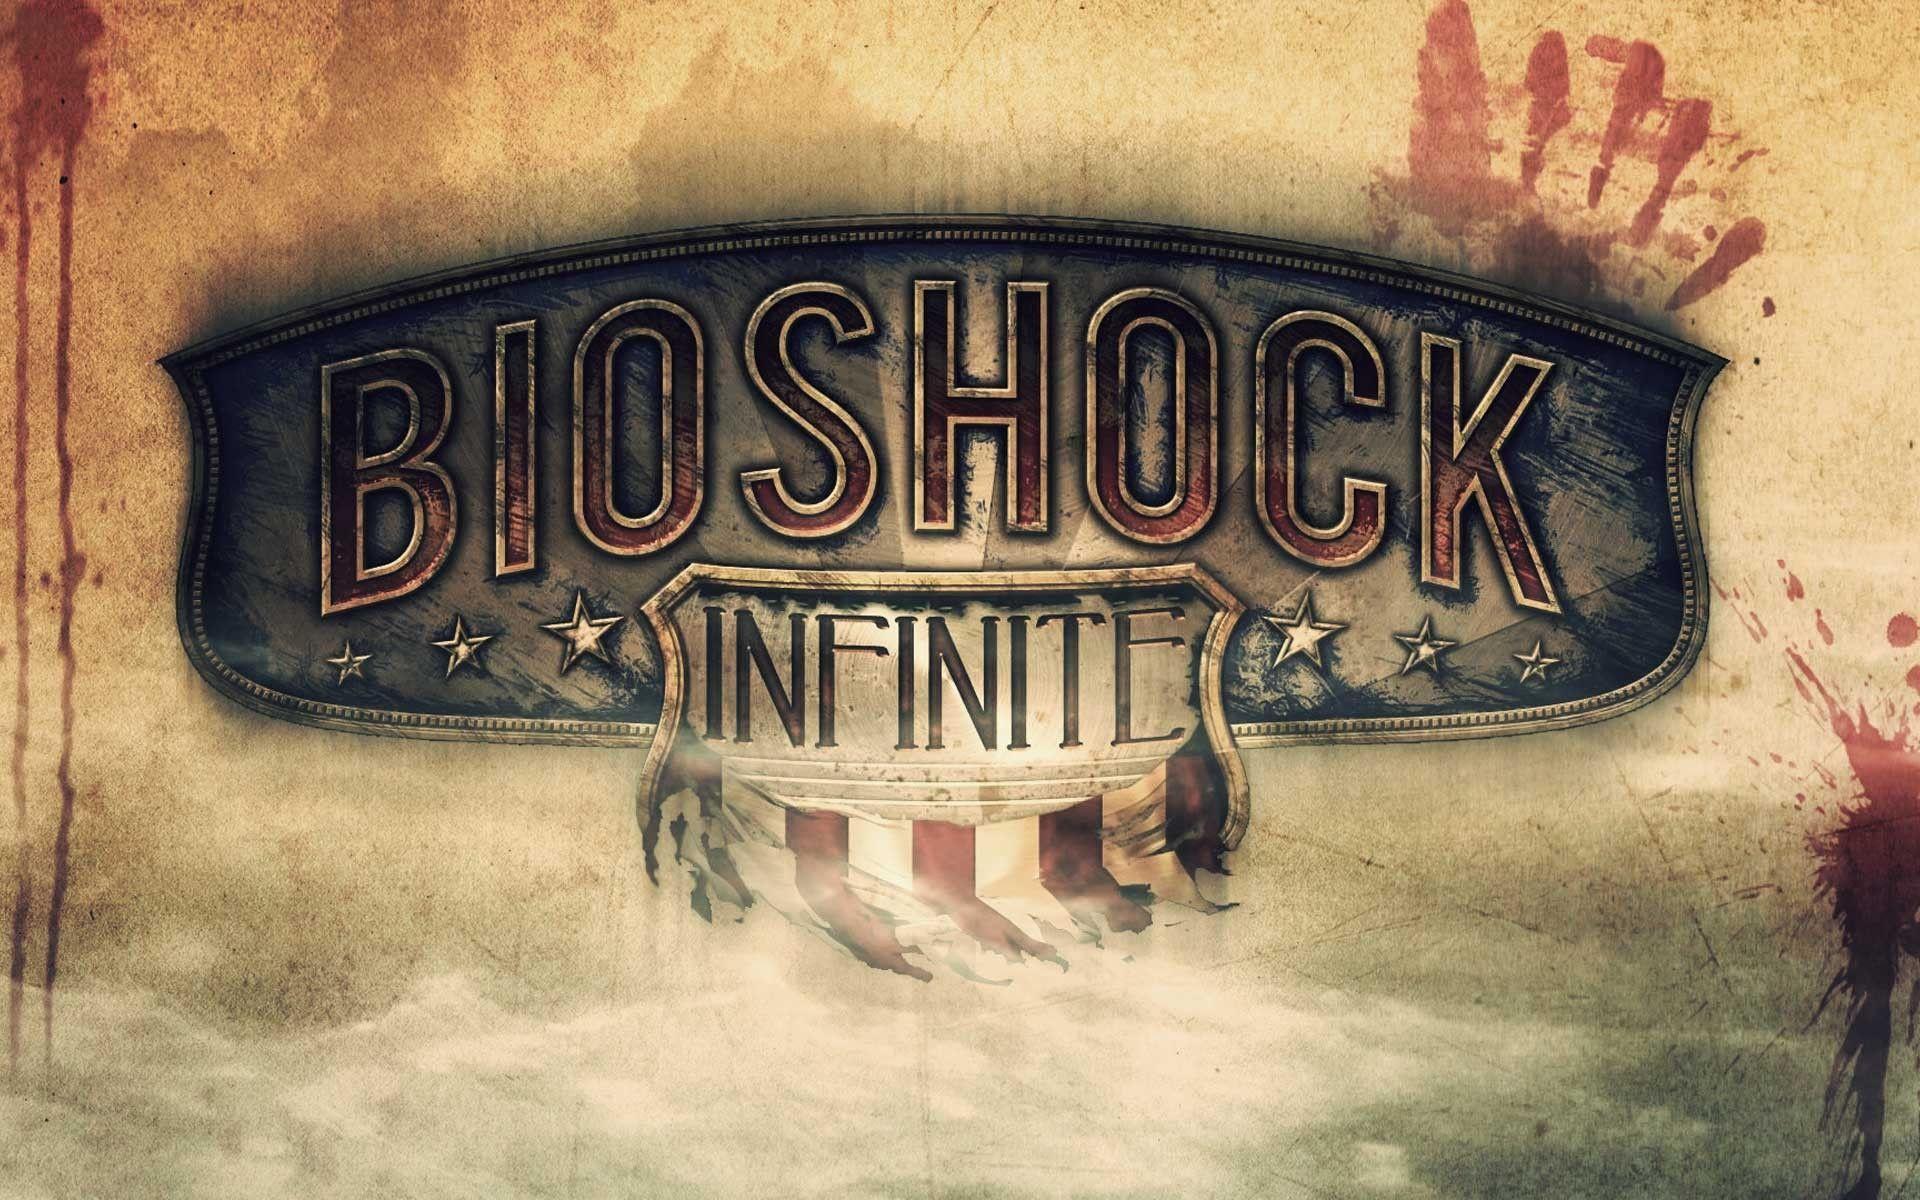 Terrific Bioshock Infinite Wallpaper Background 1920x1200PX